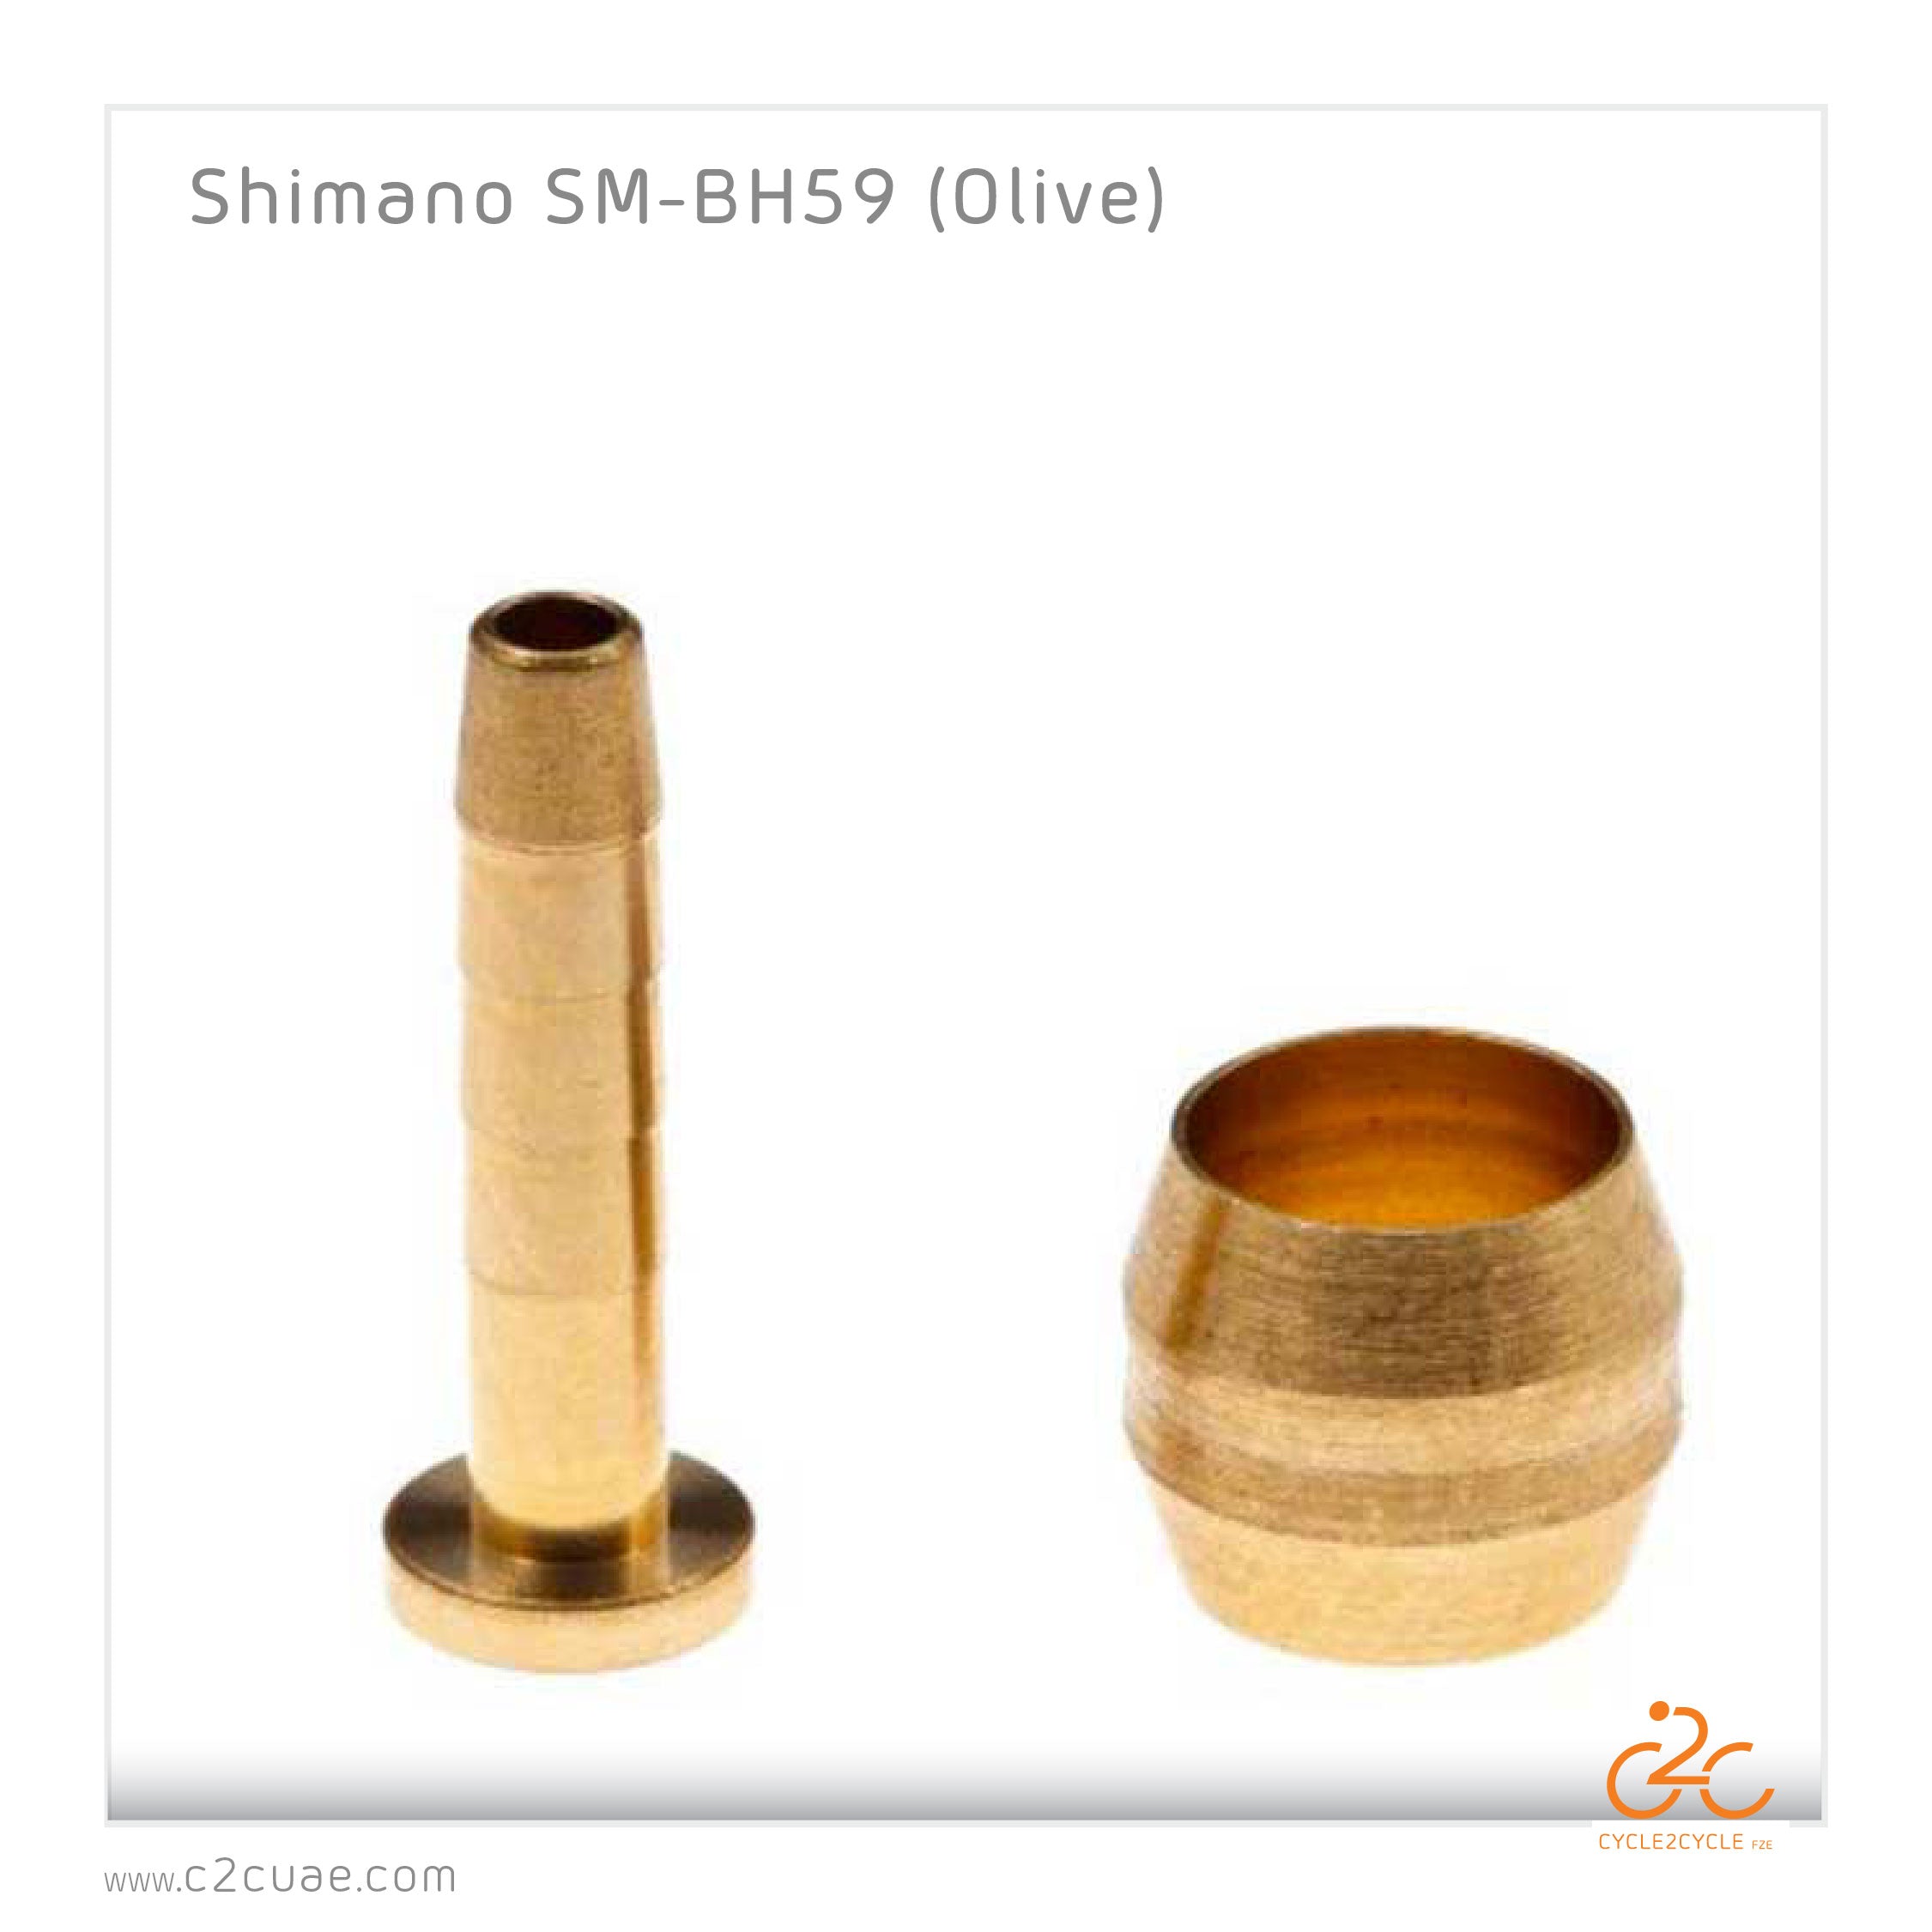 Shimano SM-BH59 (Olive)